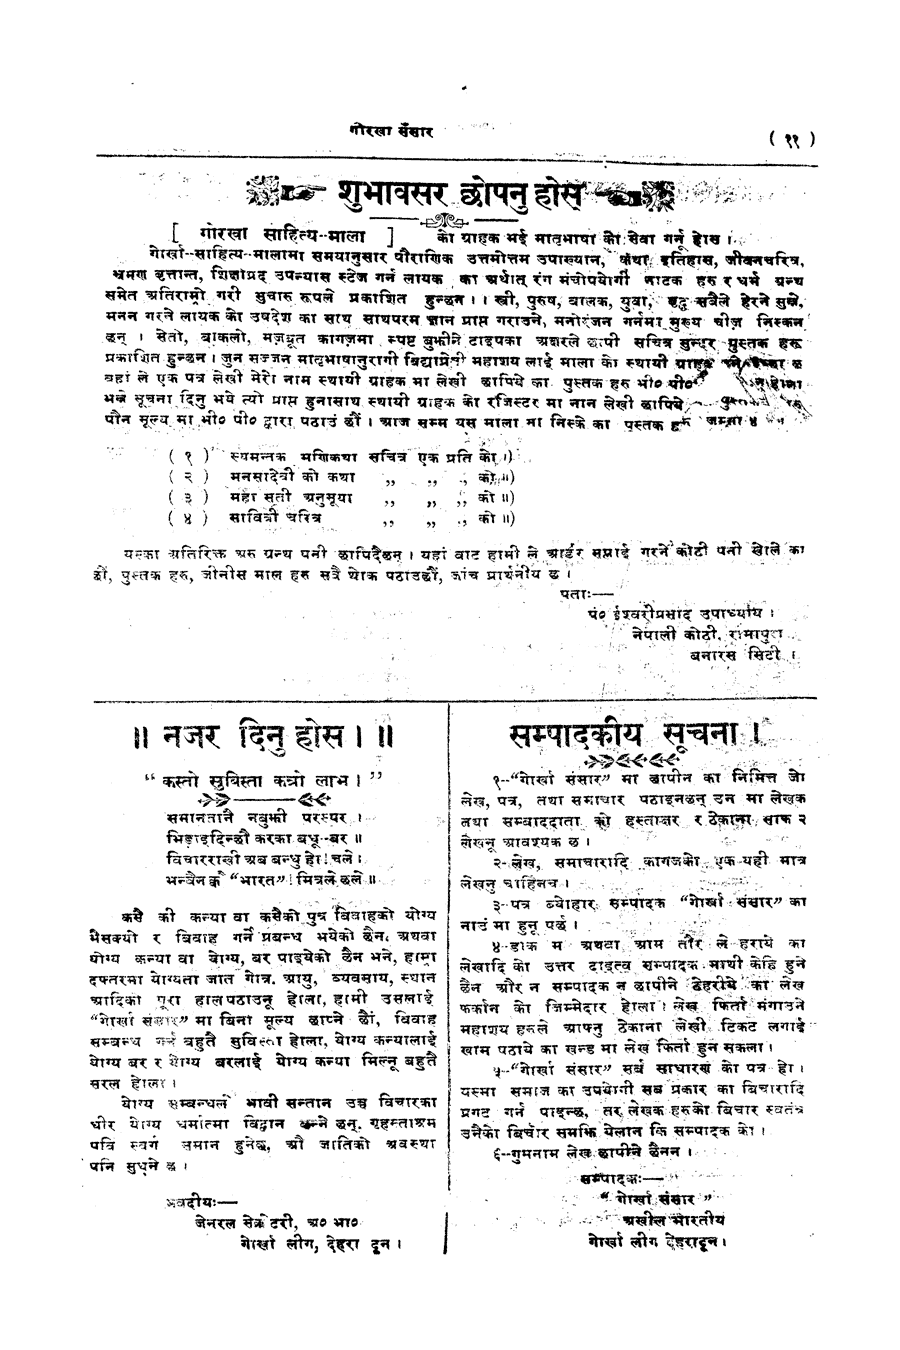 Gorkha Sansar, 1 June 1928, page 11